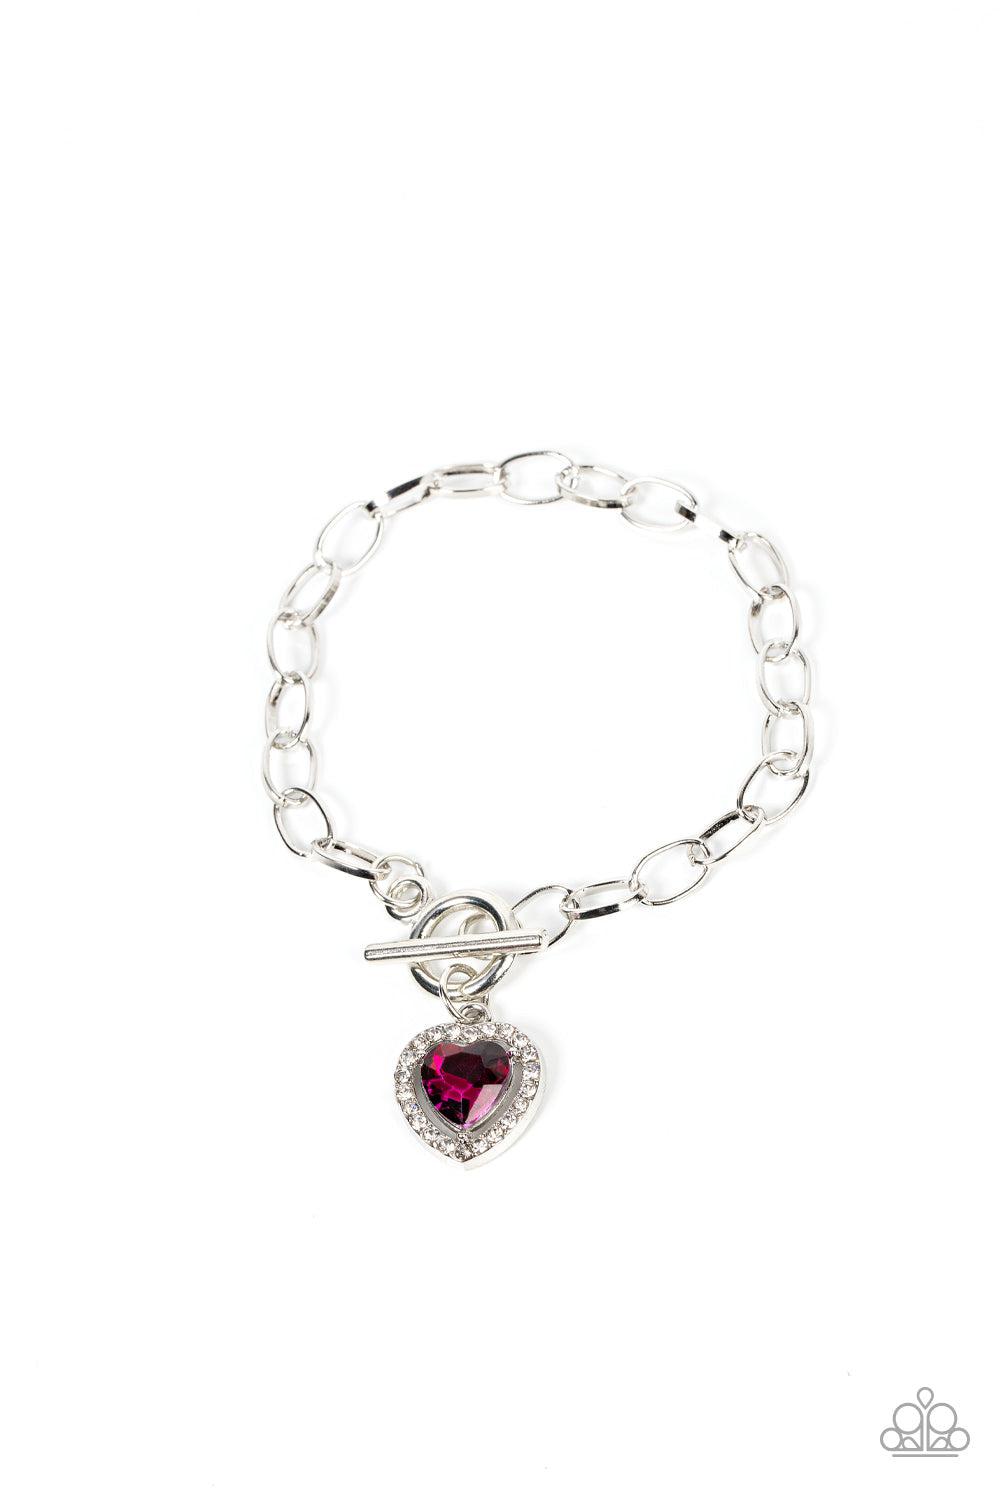 Till DAZZLE Do Us Part Pink Rhinestone Heart Bracelet - Paparazzi Accessories- lightbox - CarasShop.com - $5 Jewelry by Cara Jewels